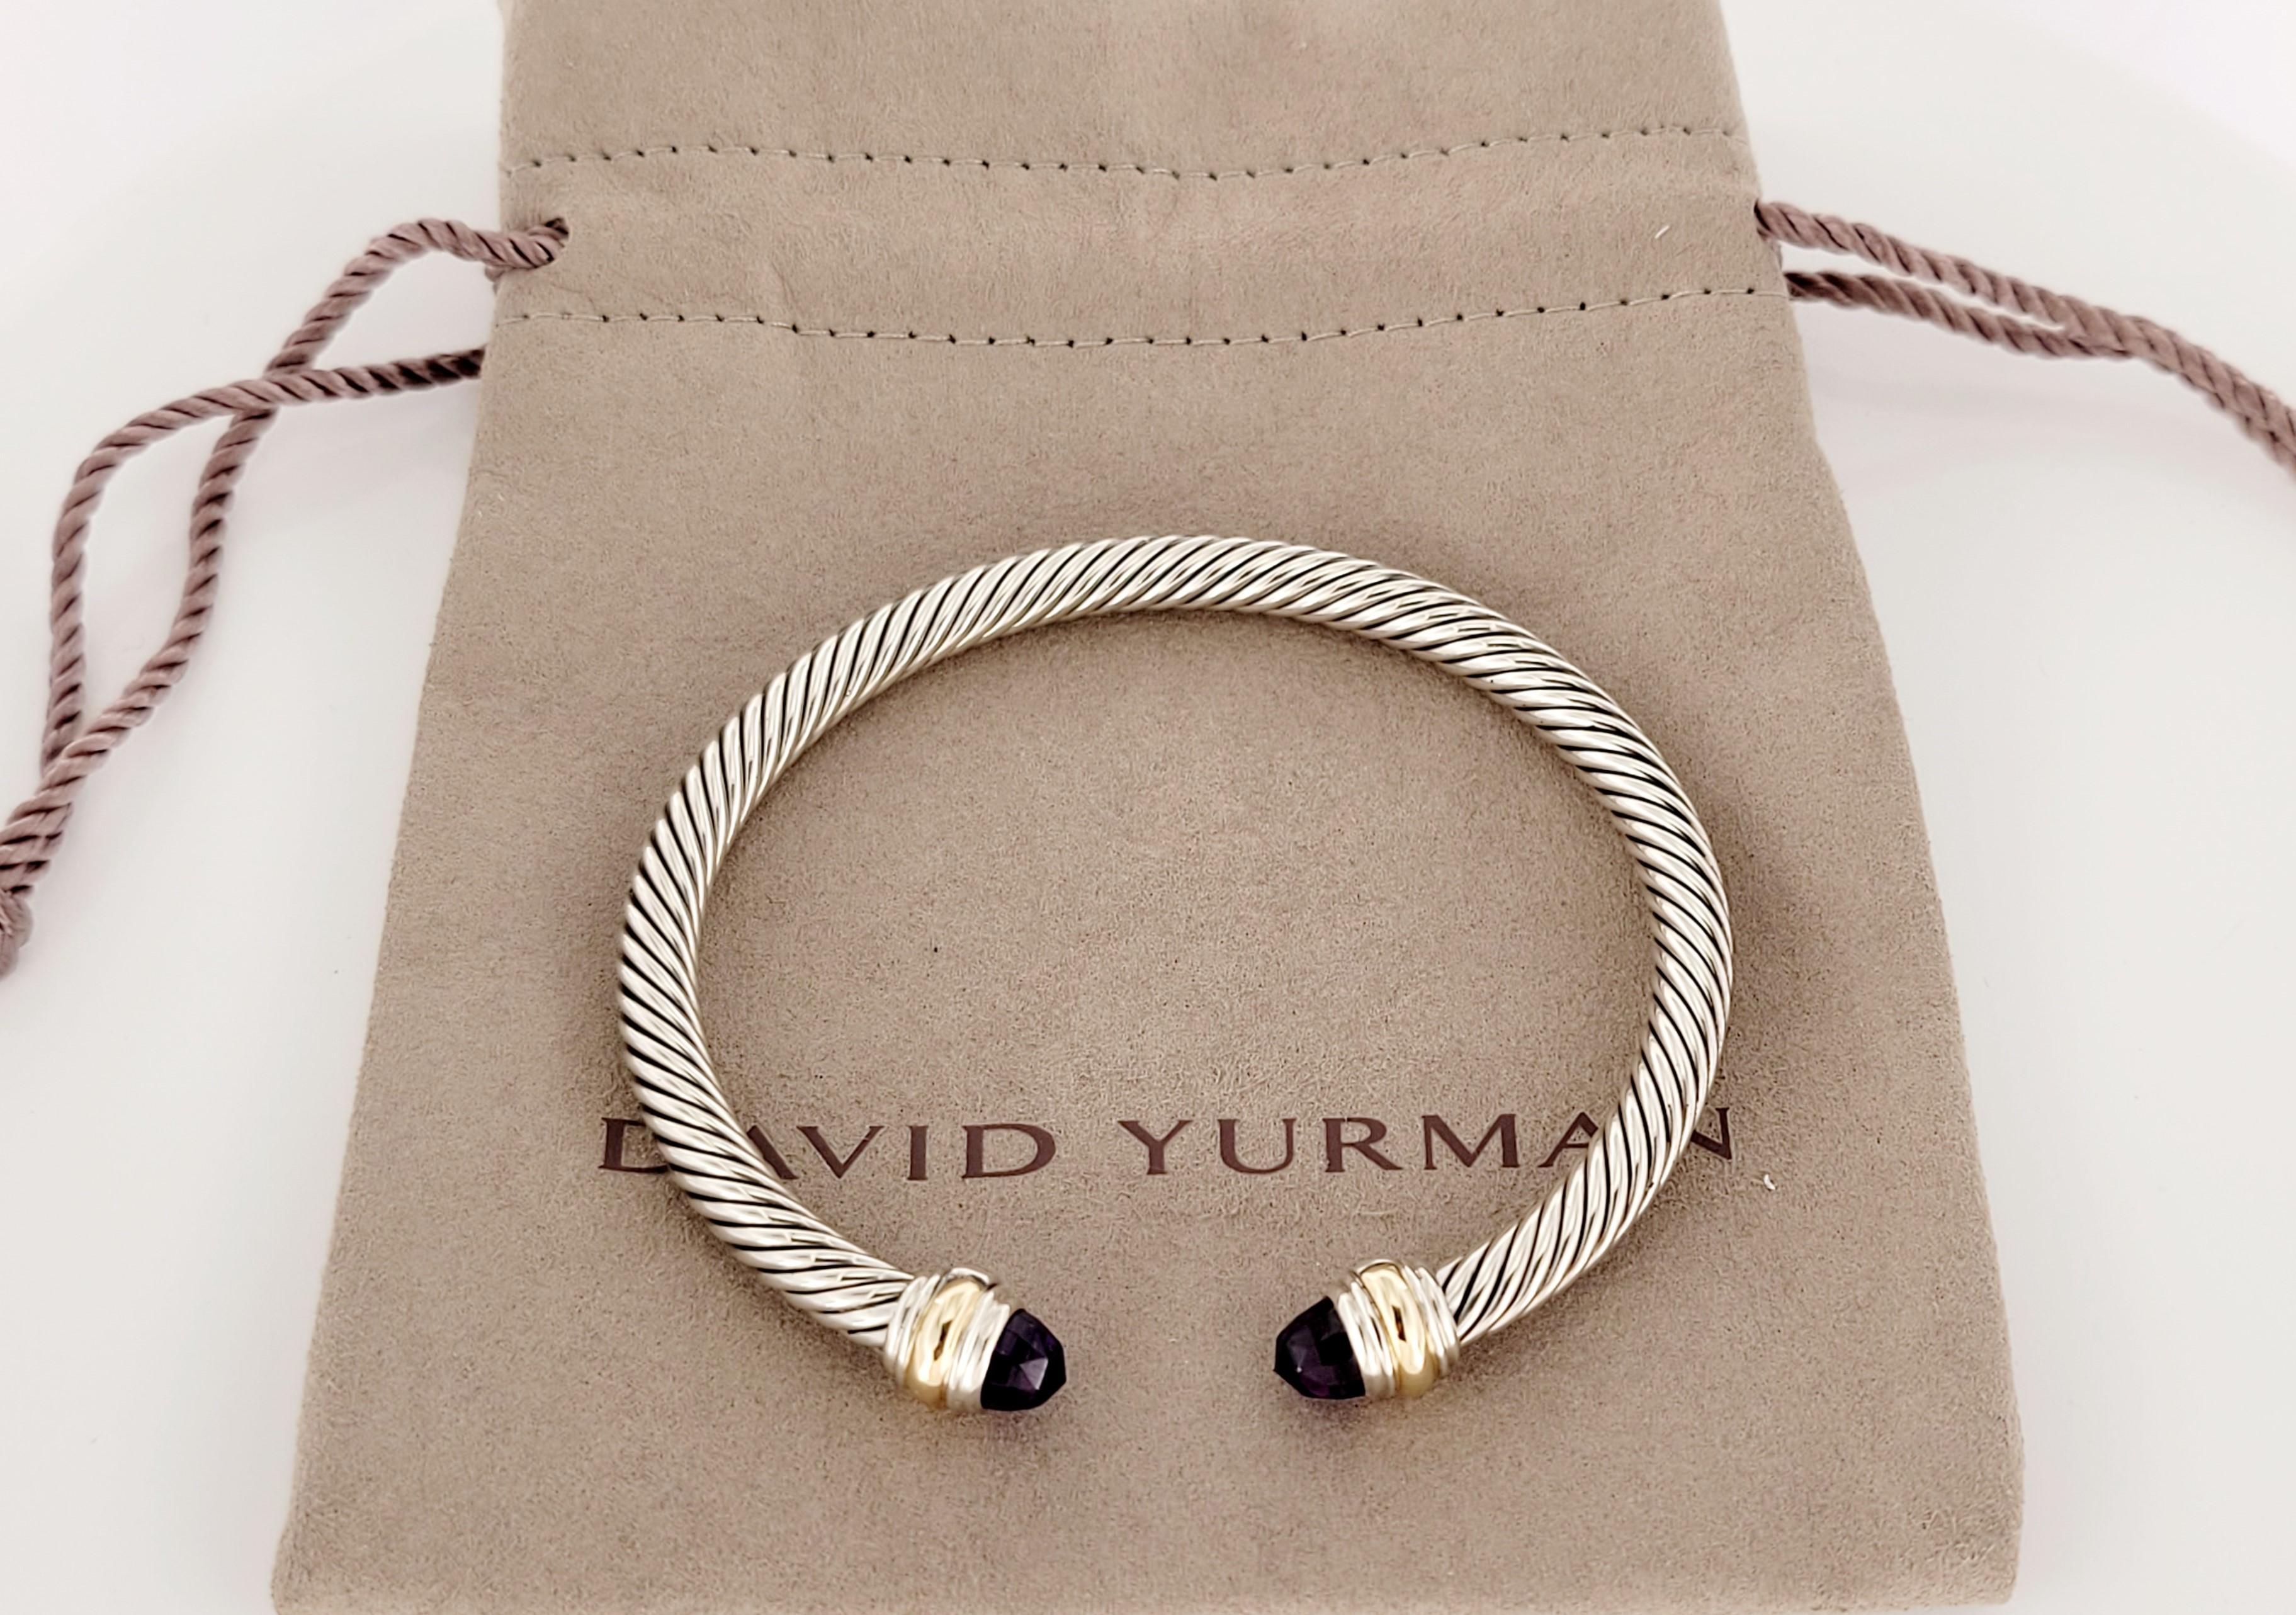 Brand David Yurman
Cable Bracelet  Amethyst
Medium size 
14K Yellow Gold & Sterling Silver
Bracelet width 5mm
Retail Price:$650
Comes with David Yurman pouch